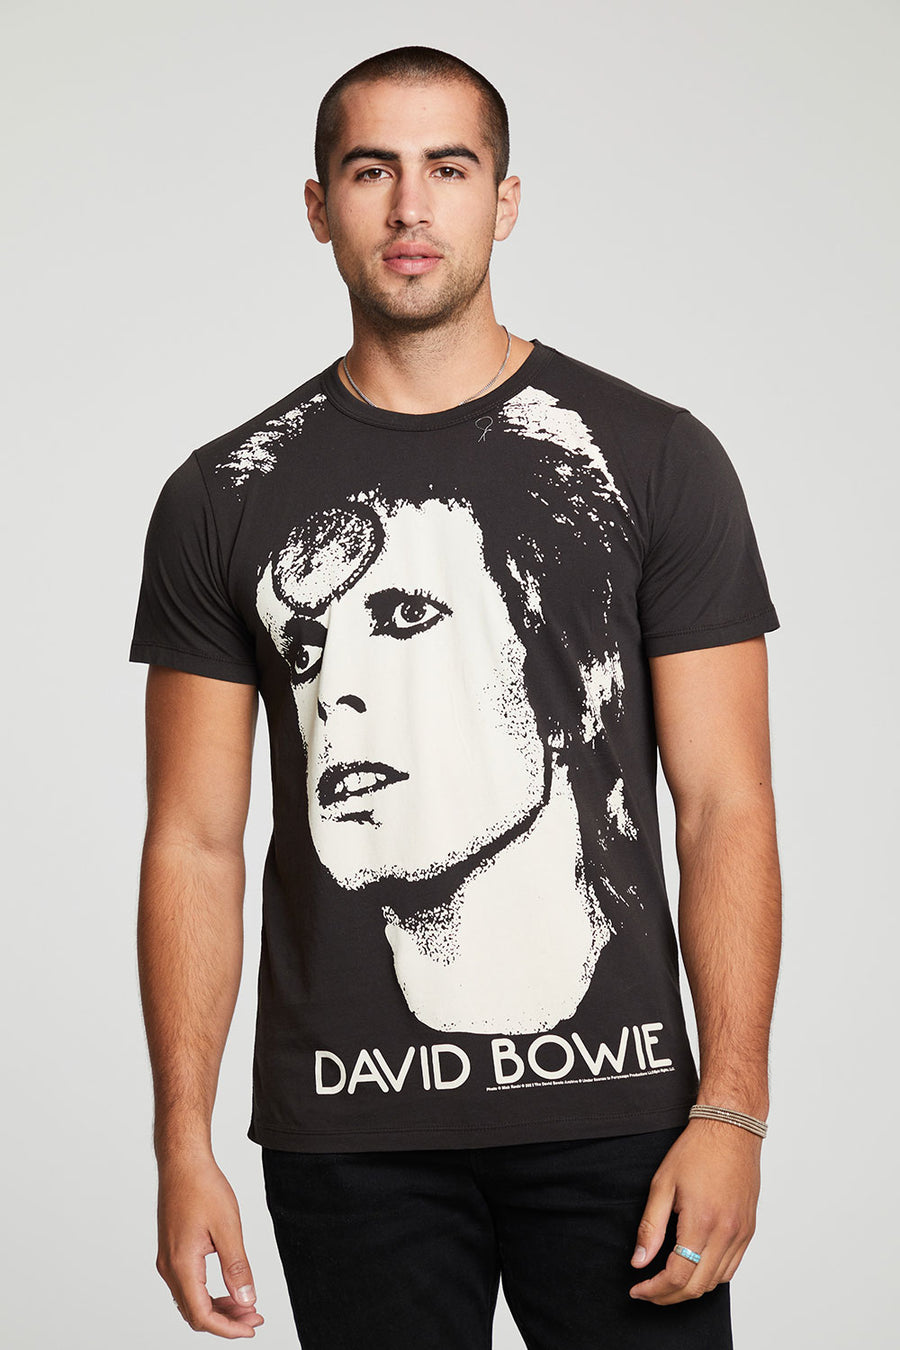 David Bowie Ziggy Stardust MENS chaserbrand